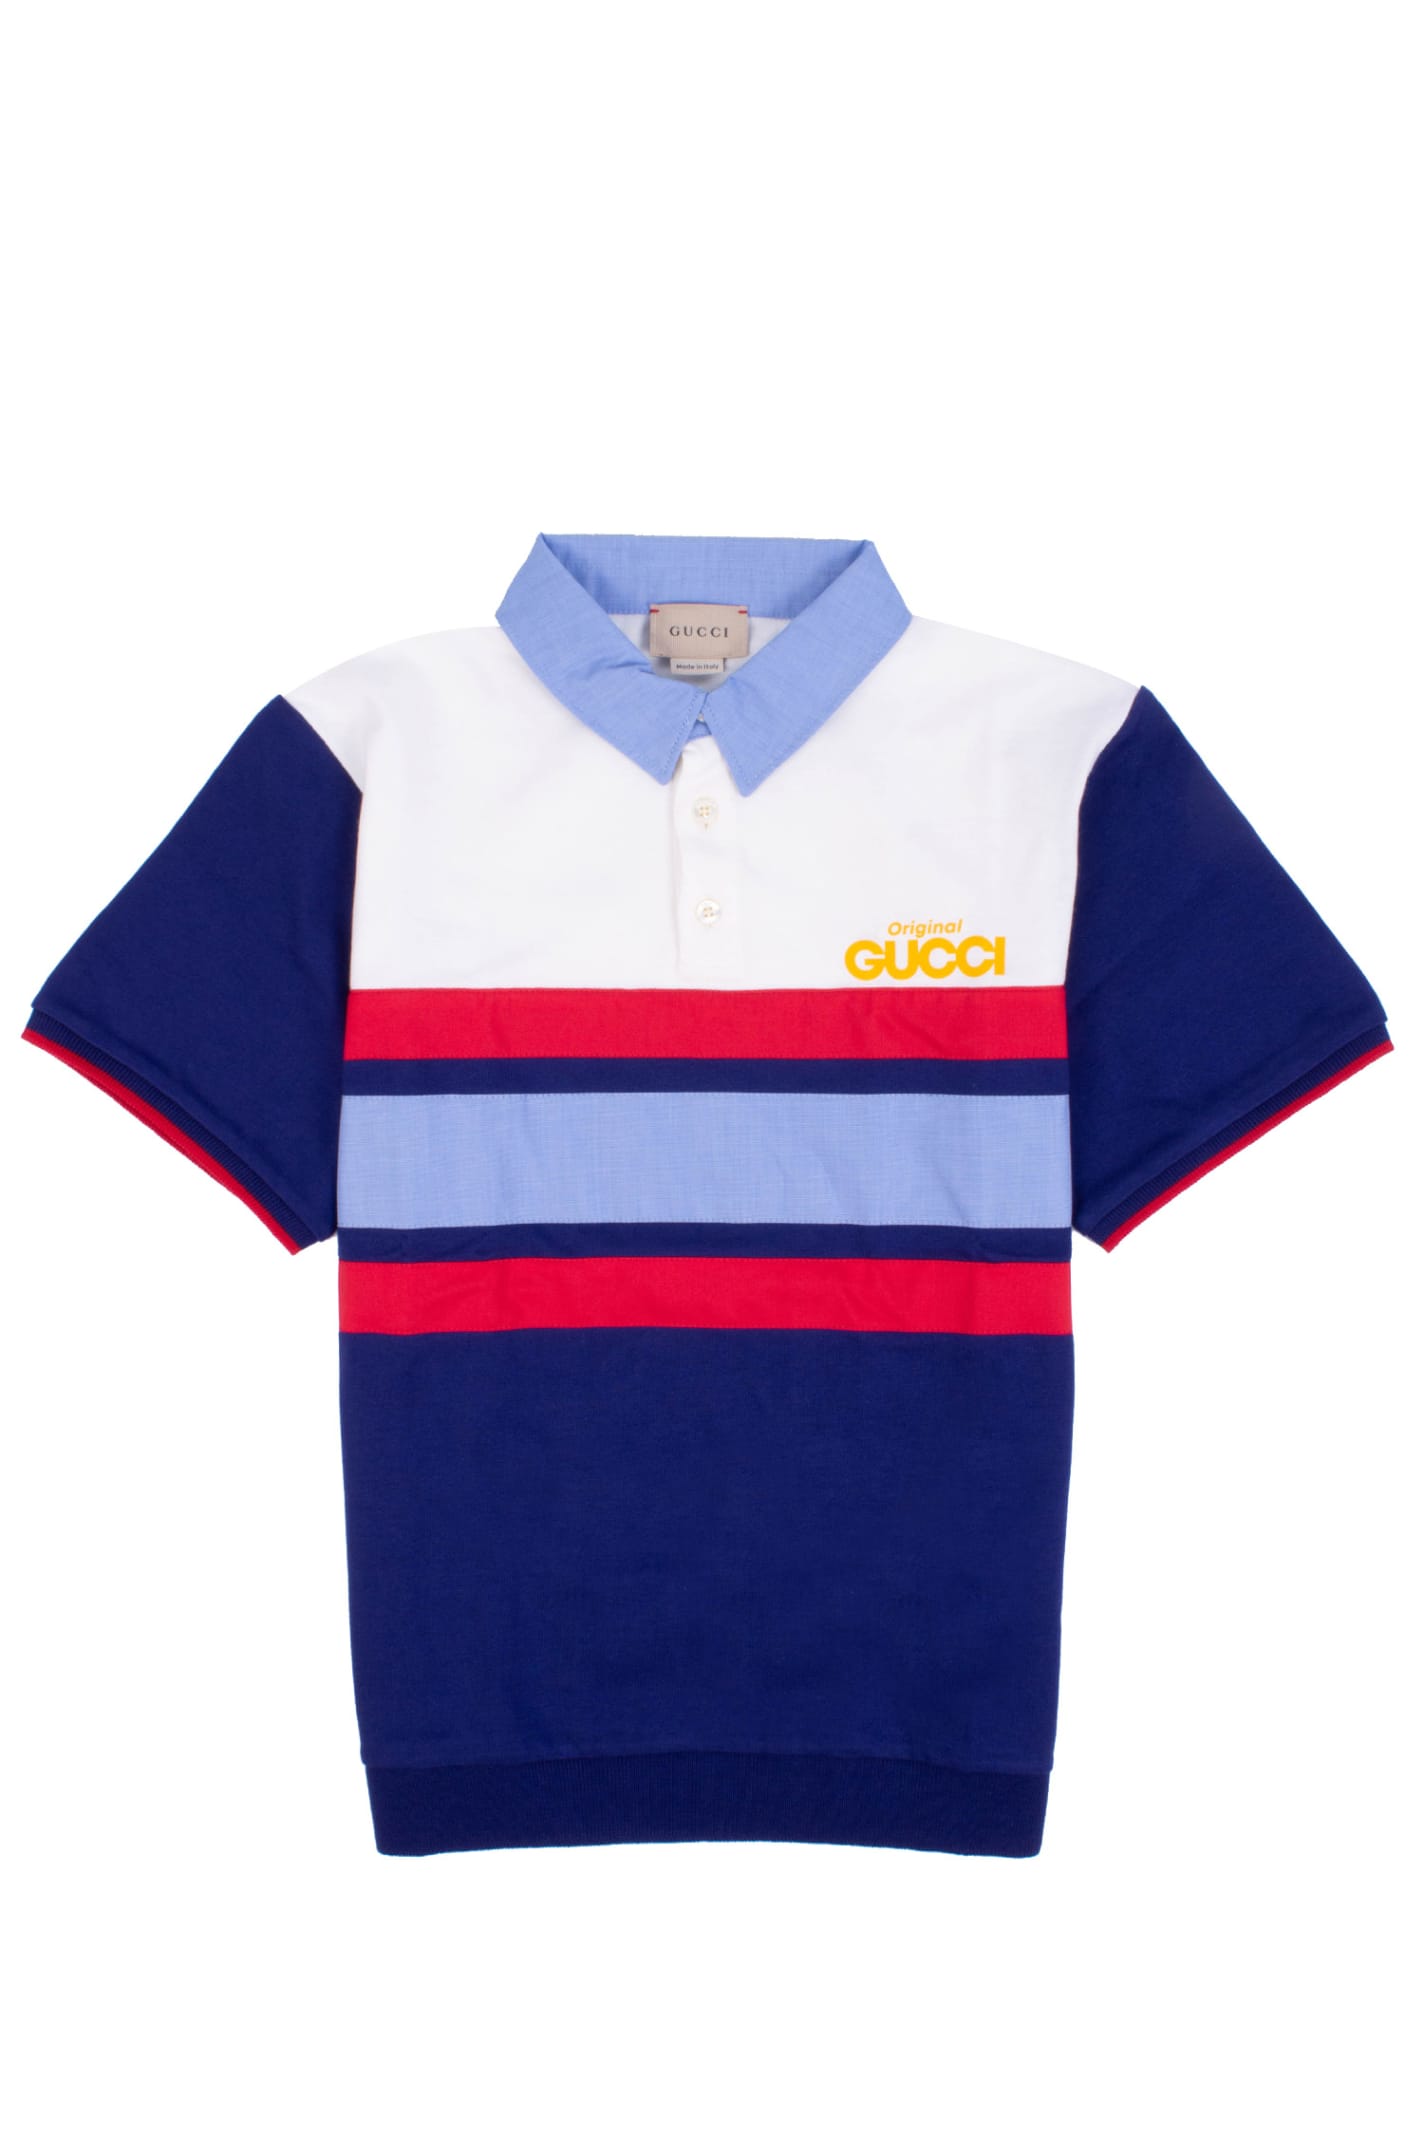 Cotton Polo Shirt With Original Gucci Print